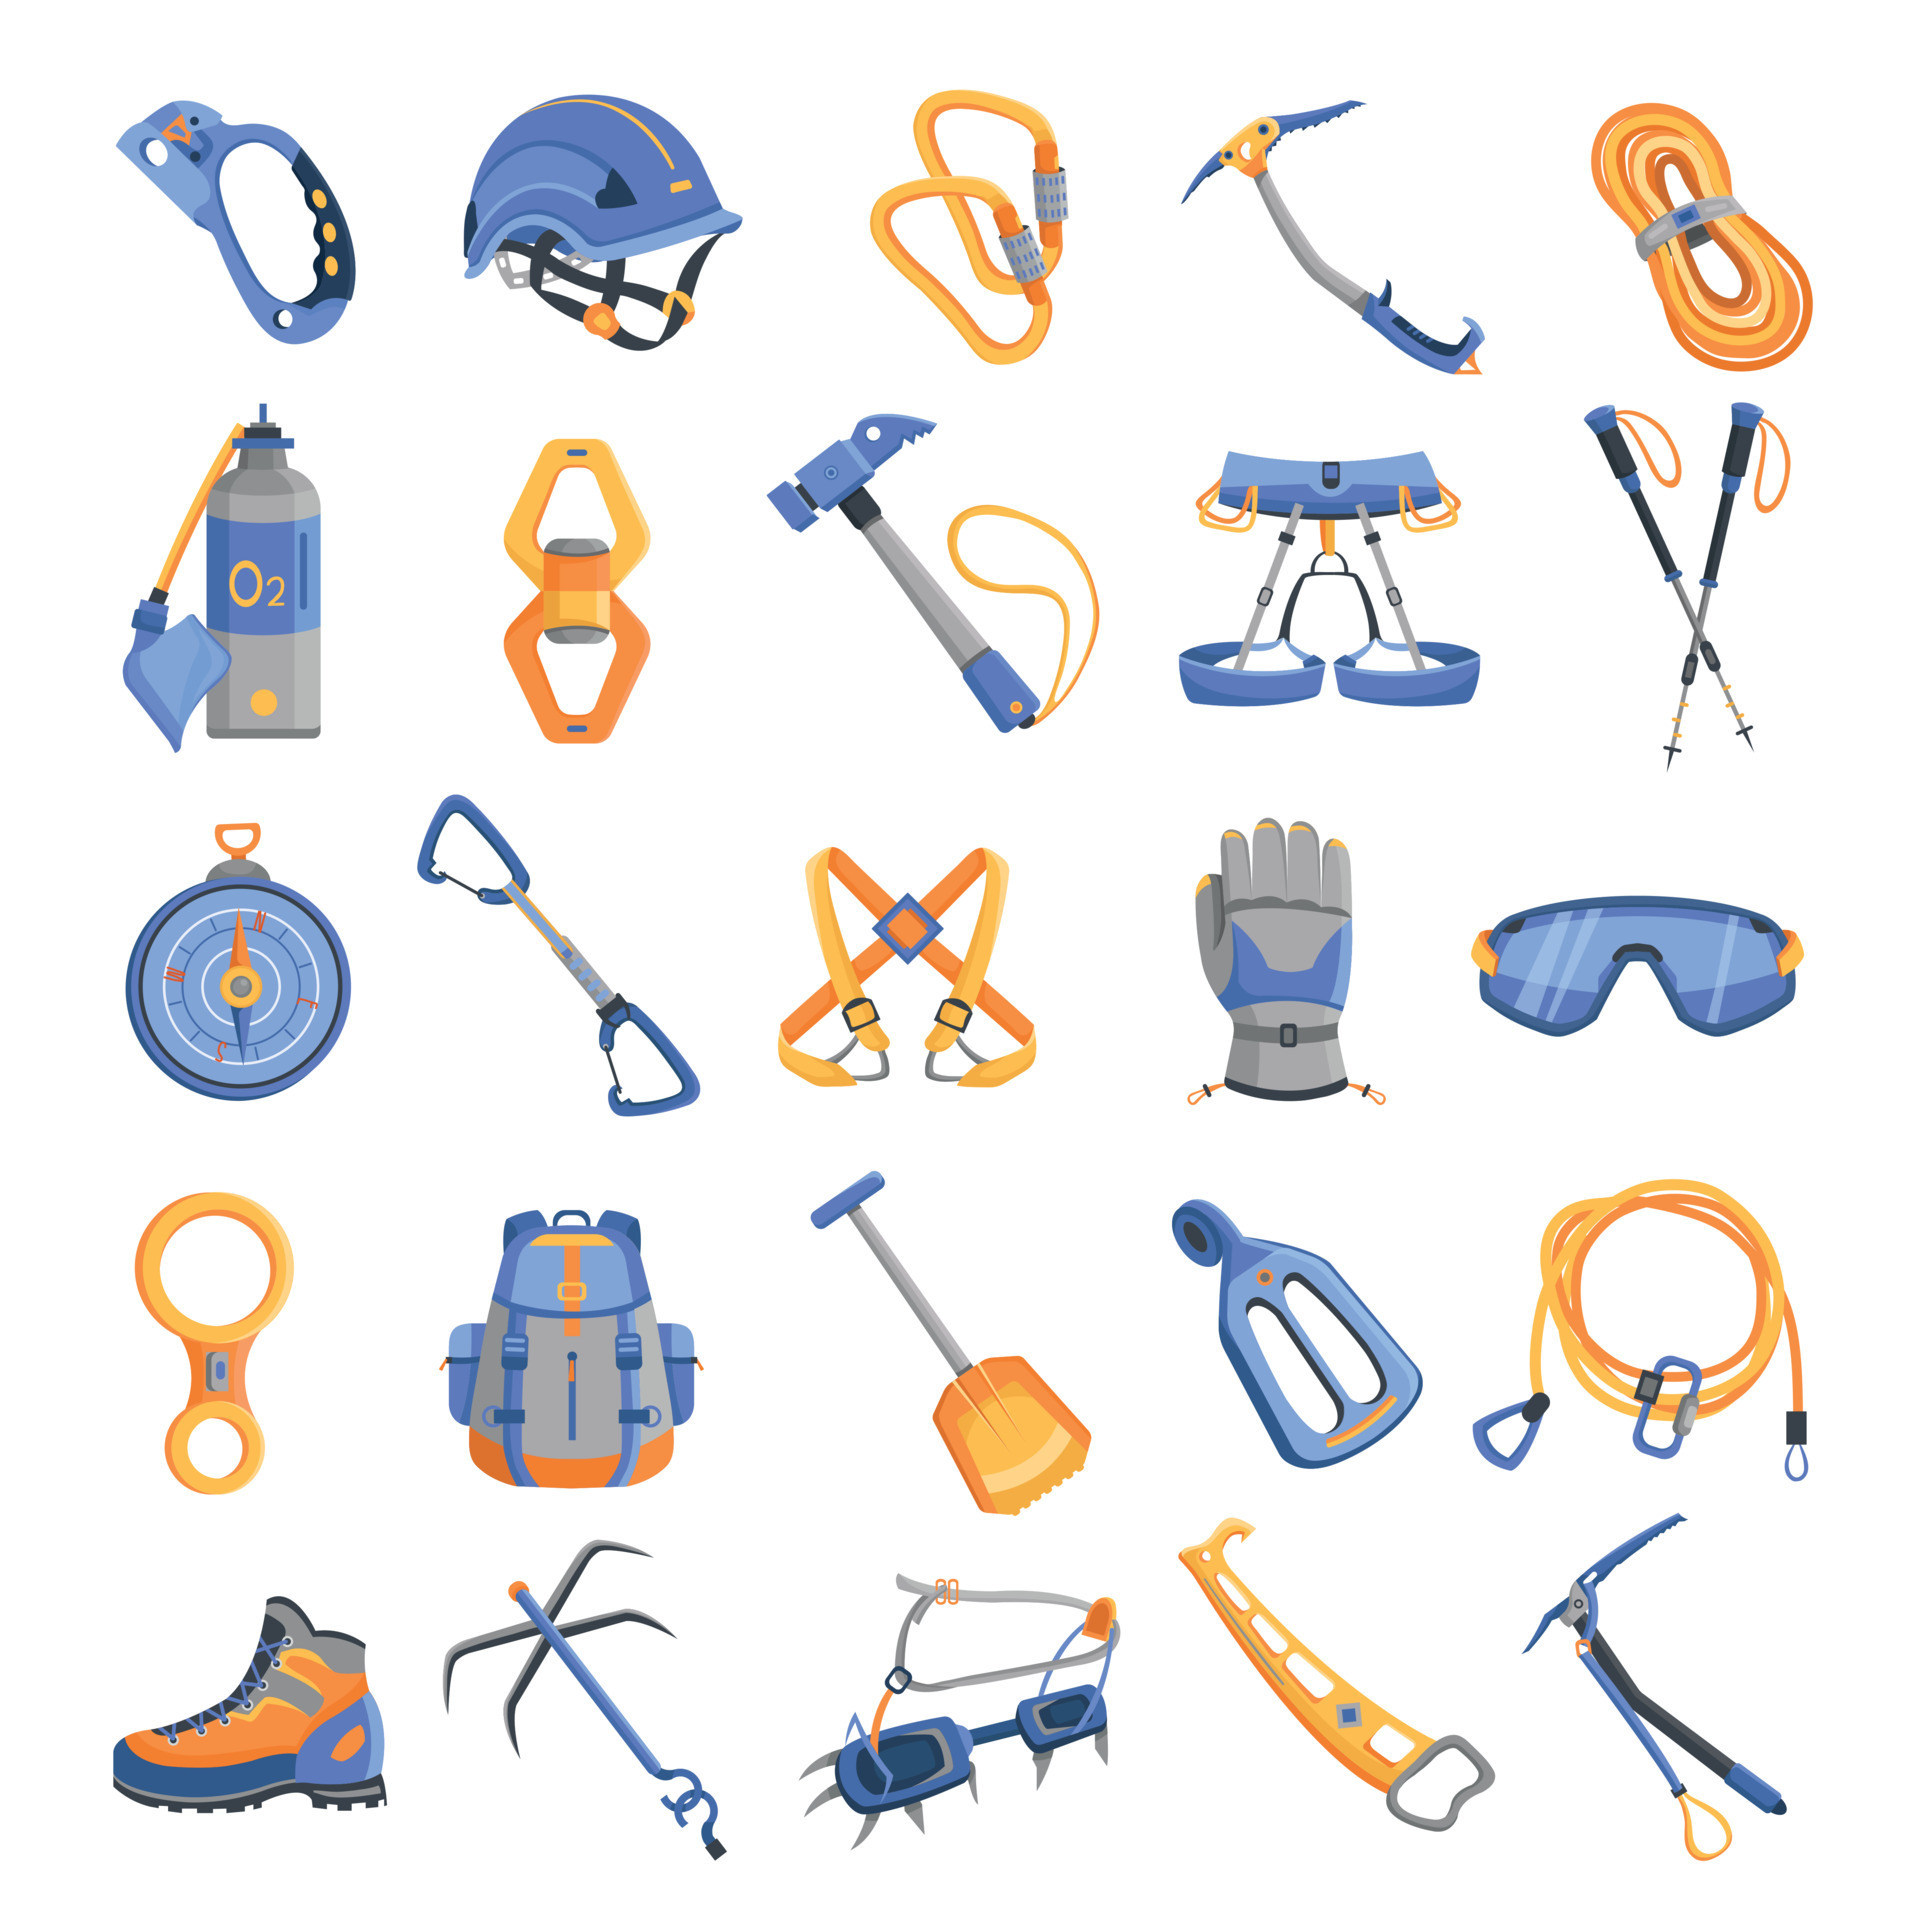 Mountaineering equipment icons set, cartoon style 8778863 Vector